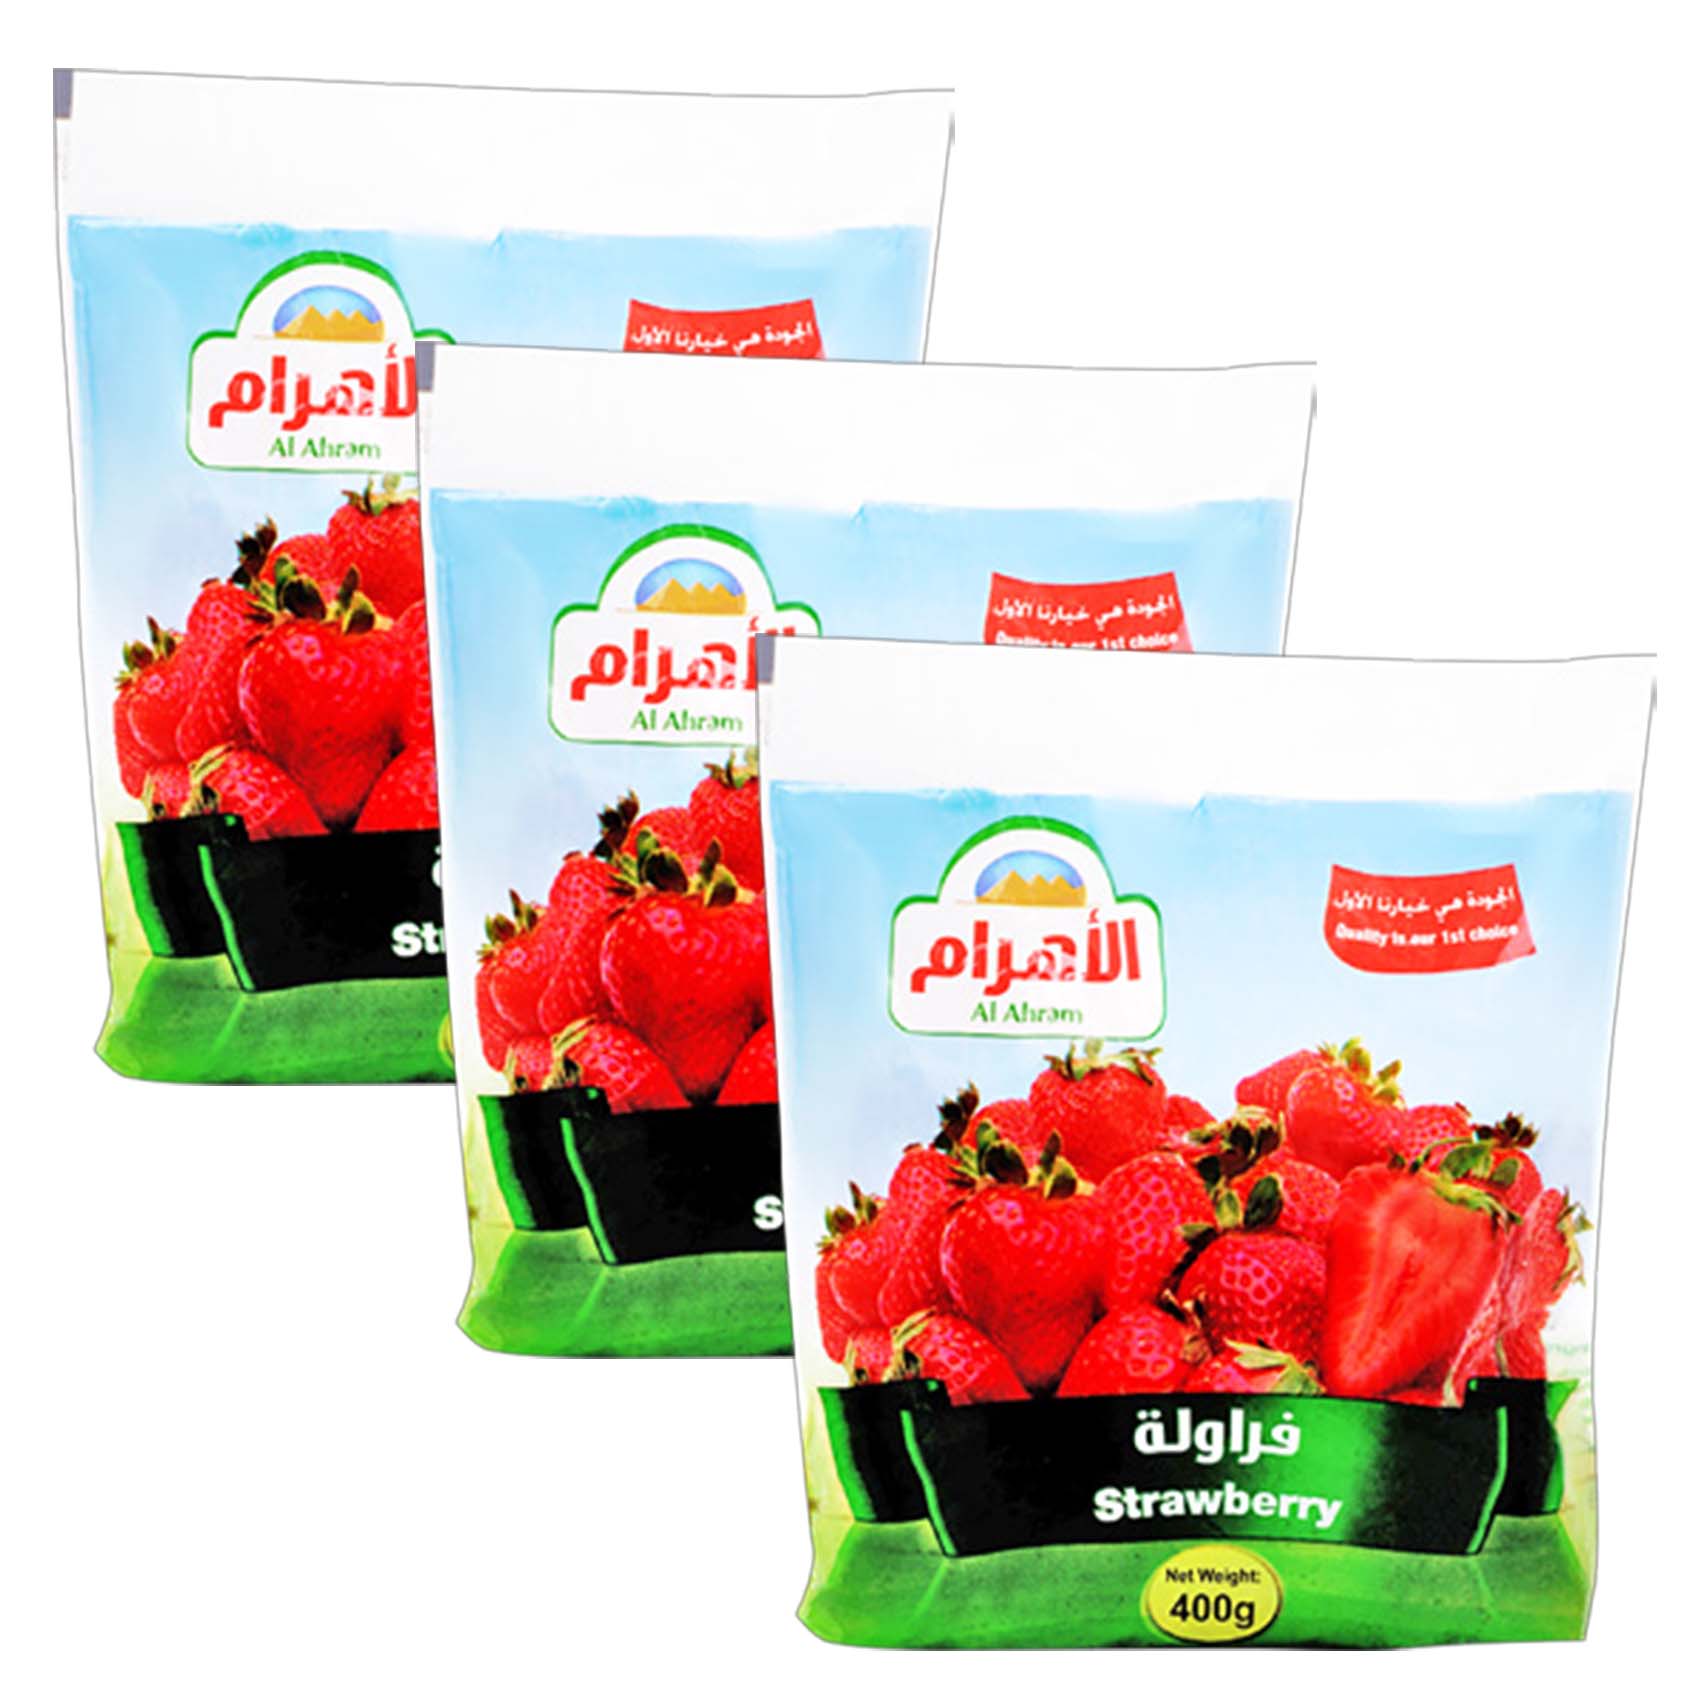 Al Ahram Strawberry 400g x Pack of 3